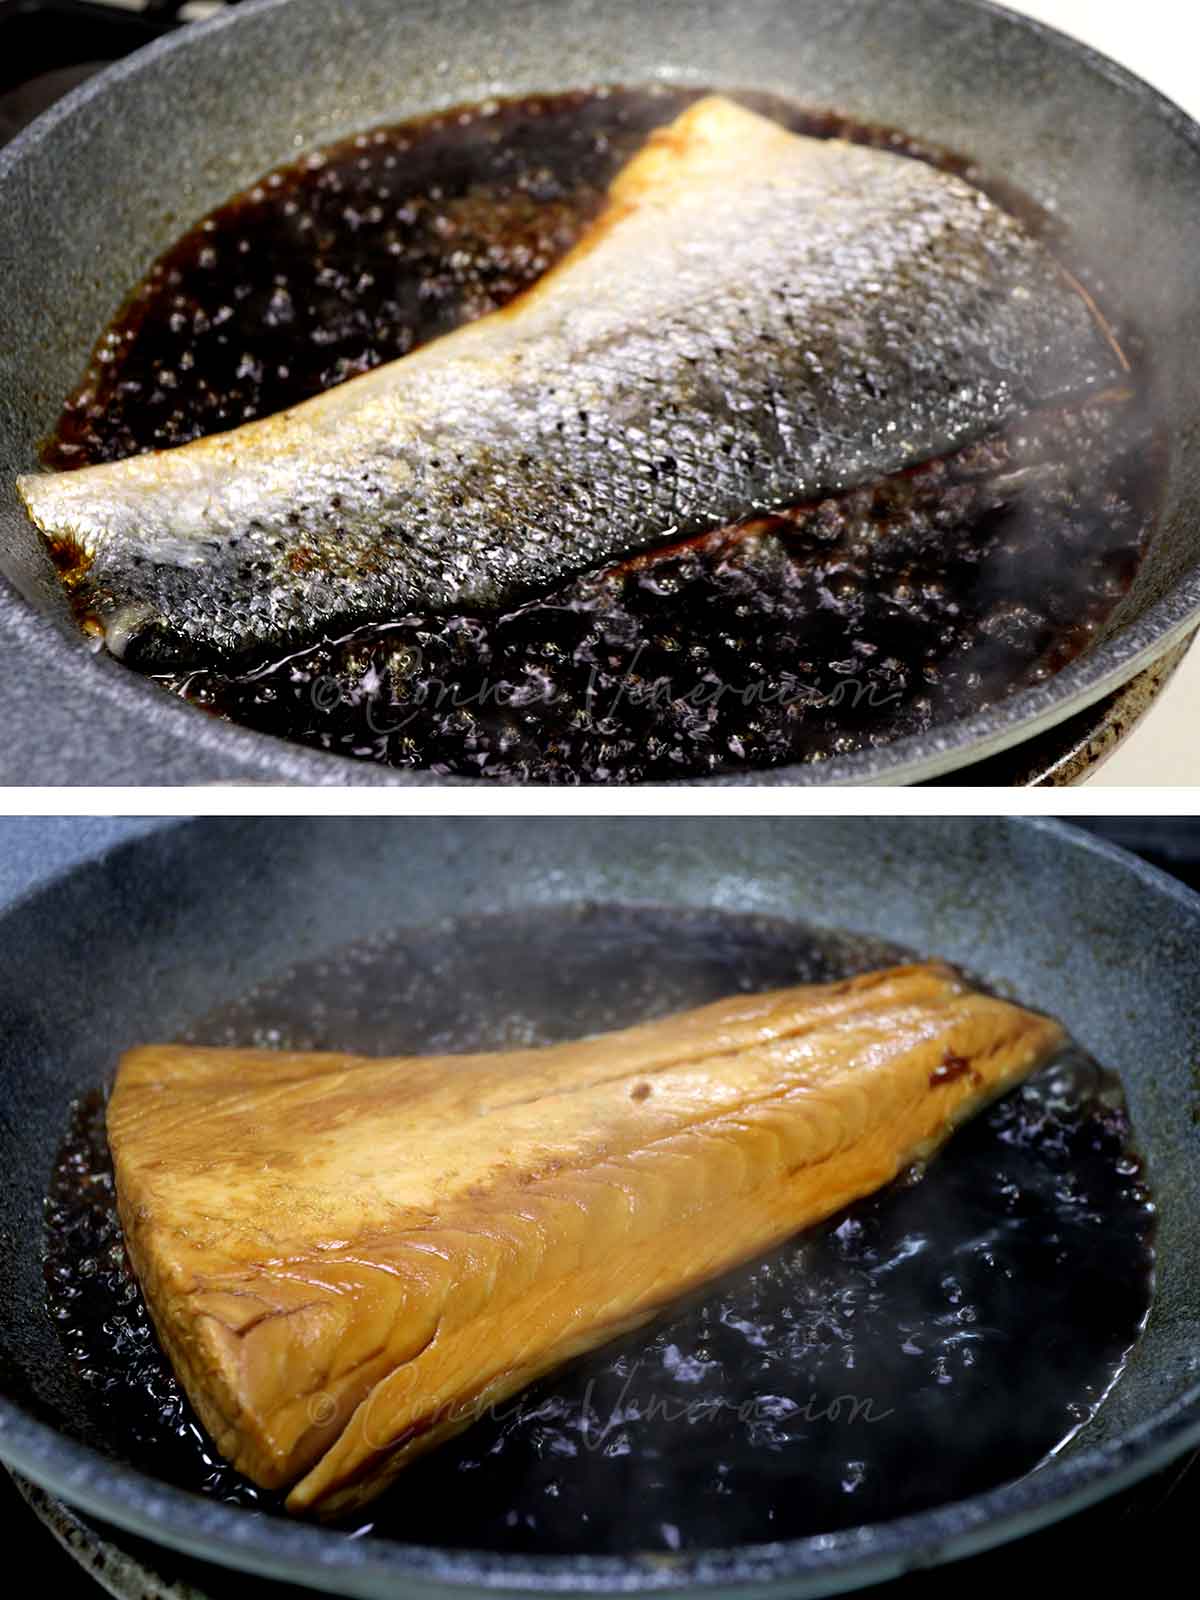 Cooking a salmon fillet in teriyaki sauce